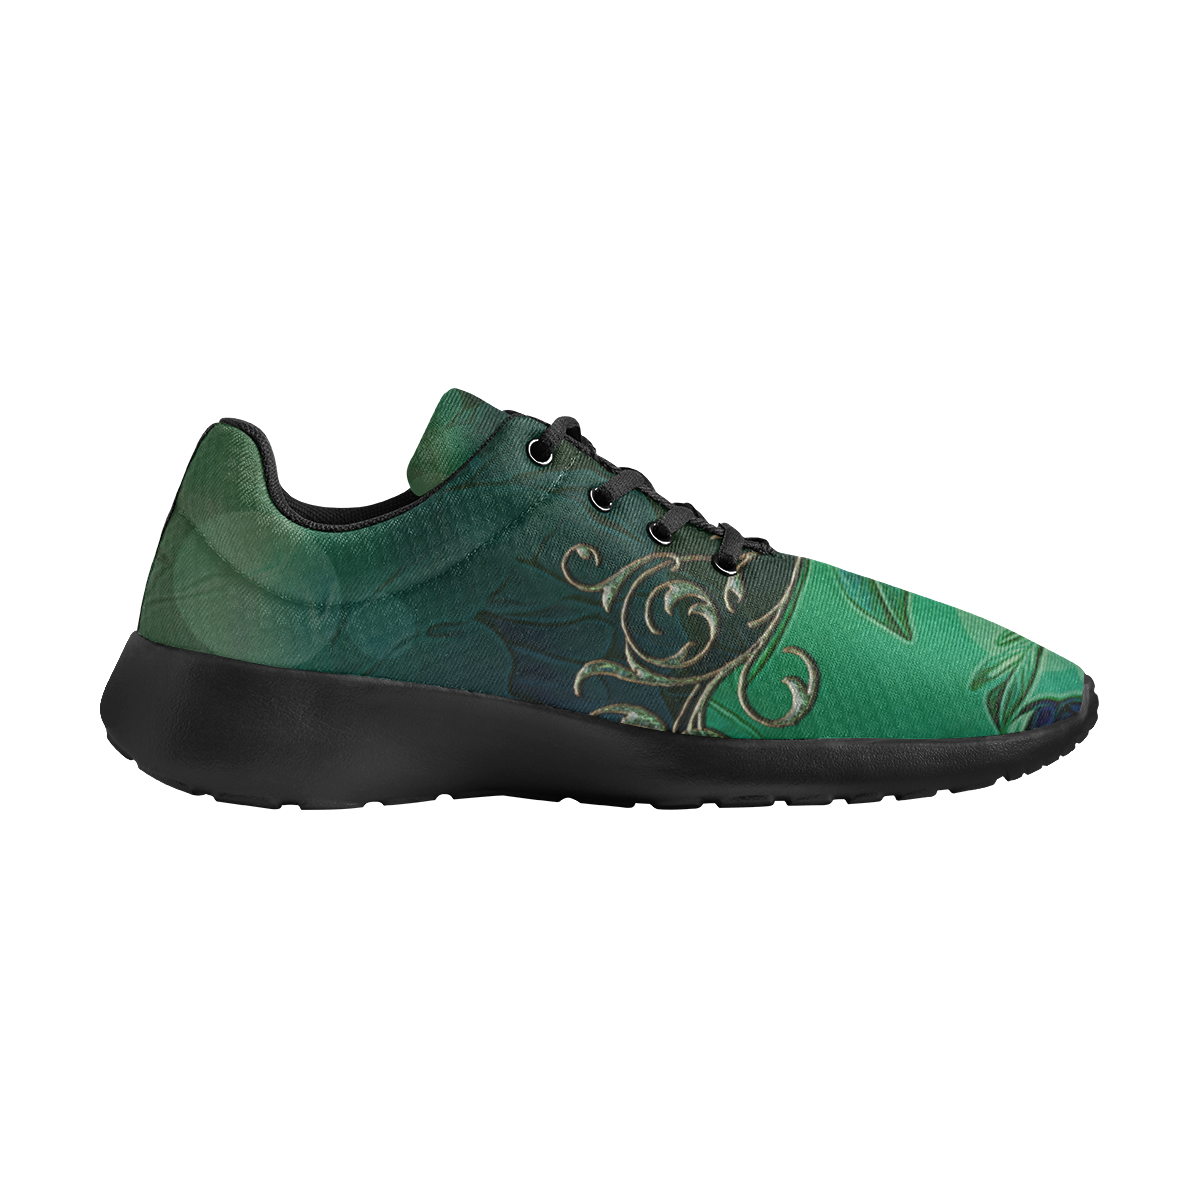 Green floral design Women's Athletic Shoes (Model 0200)